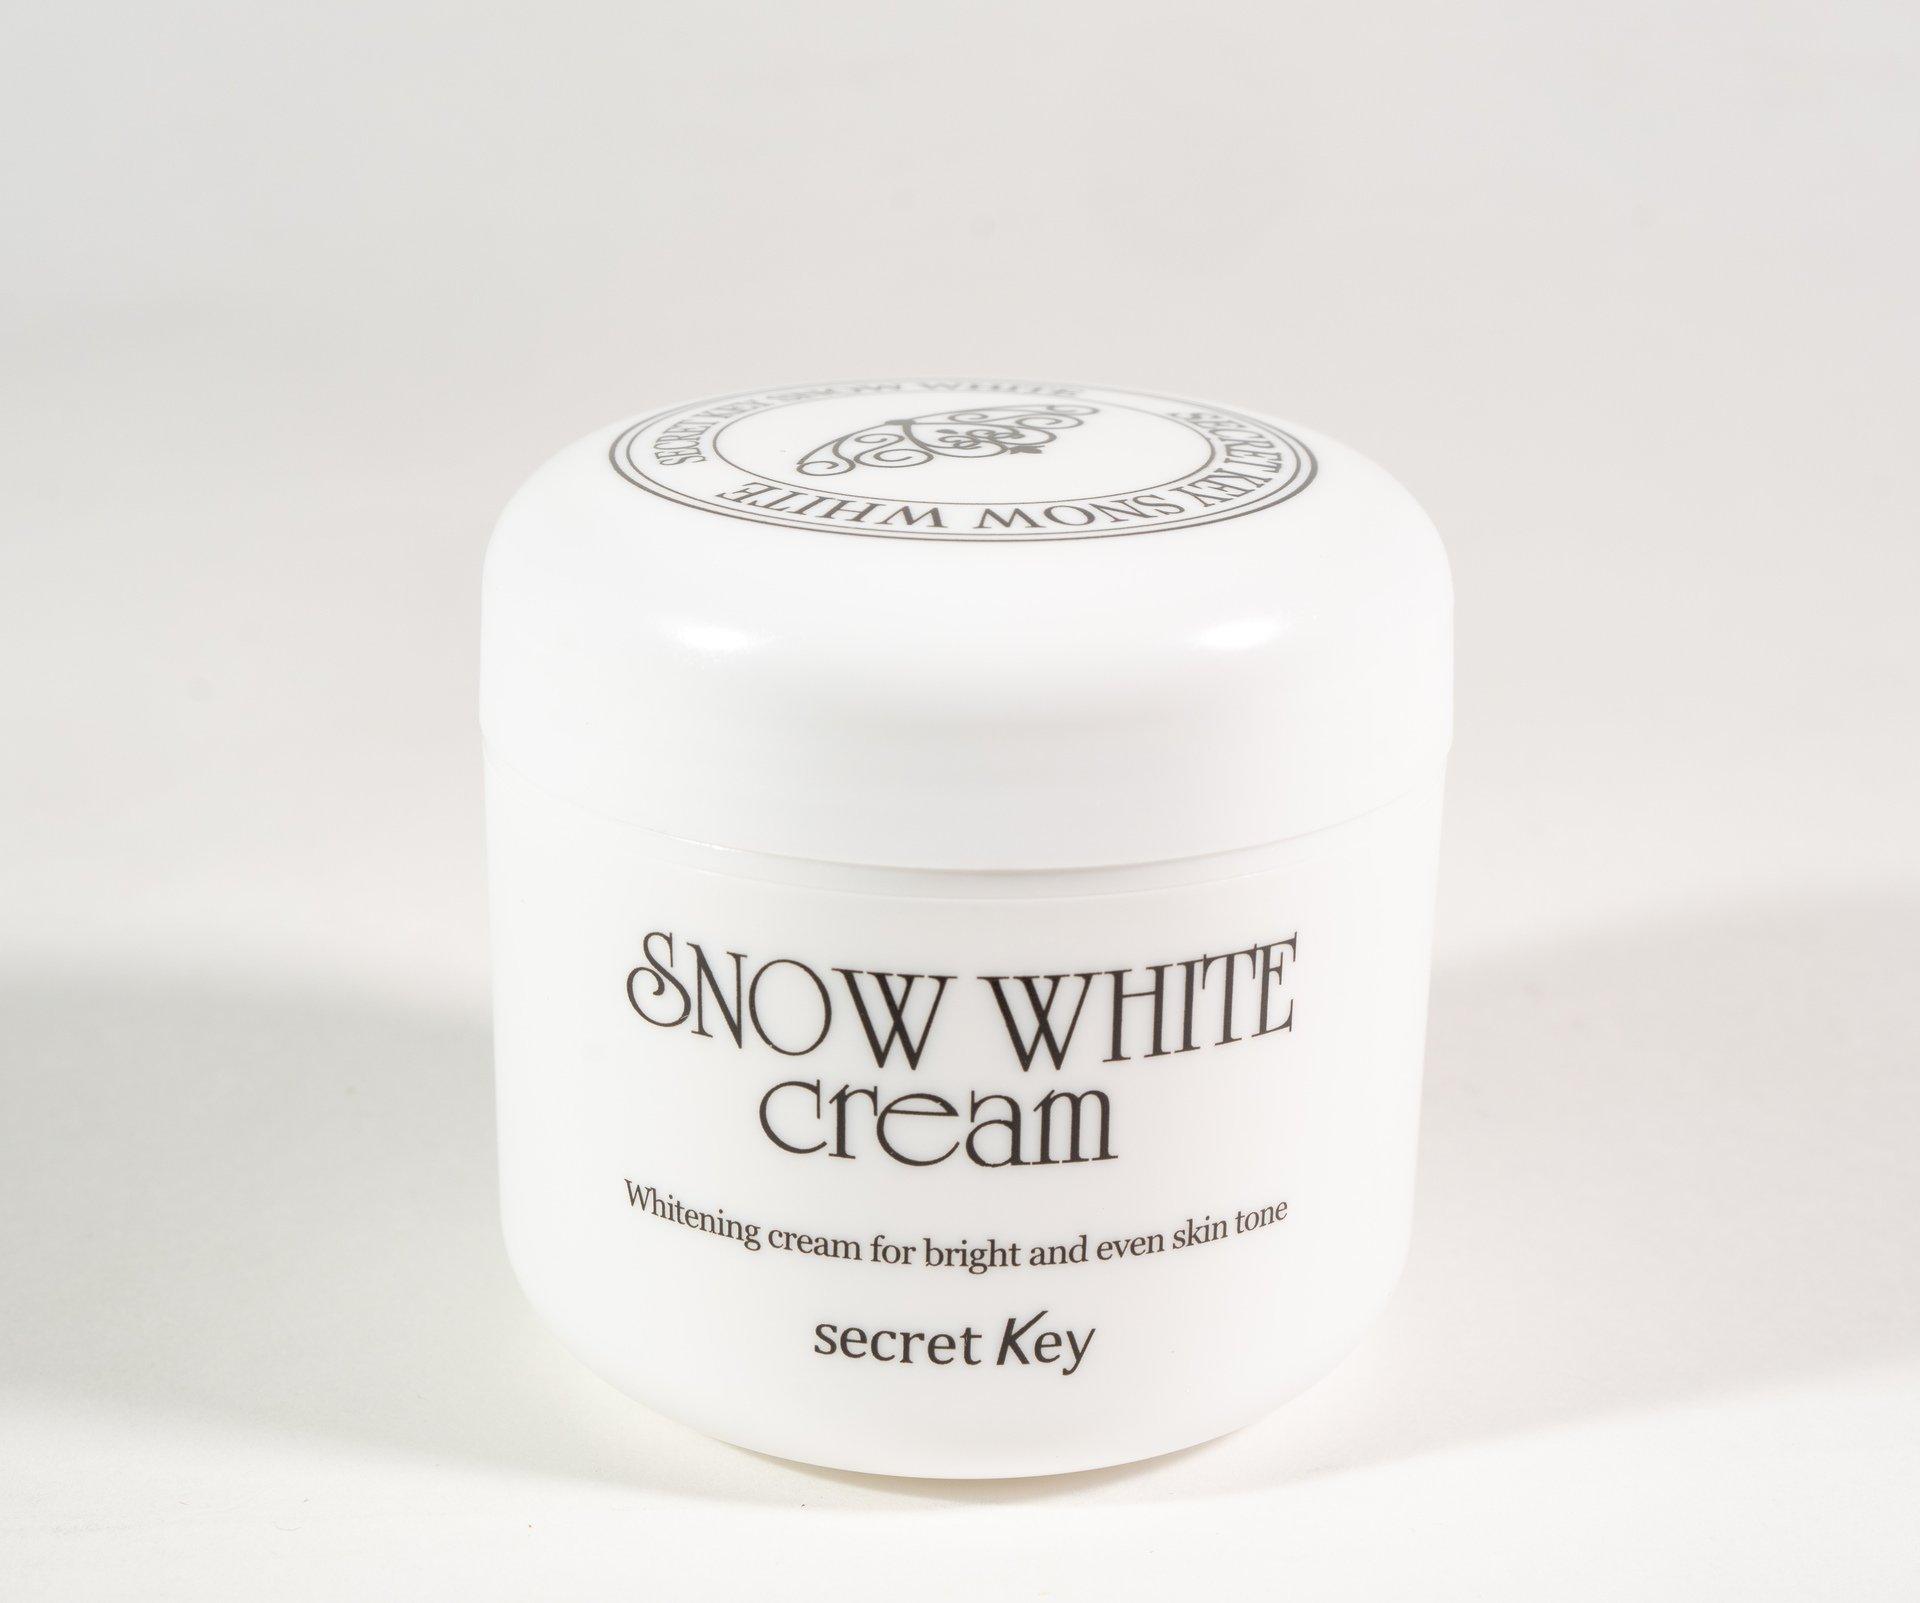 SECRETKEY Snow White Cream 50g